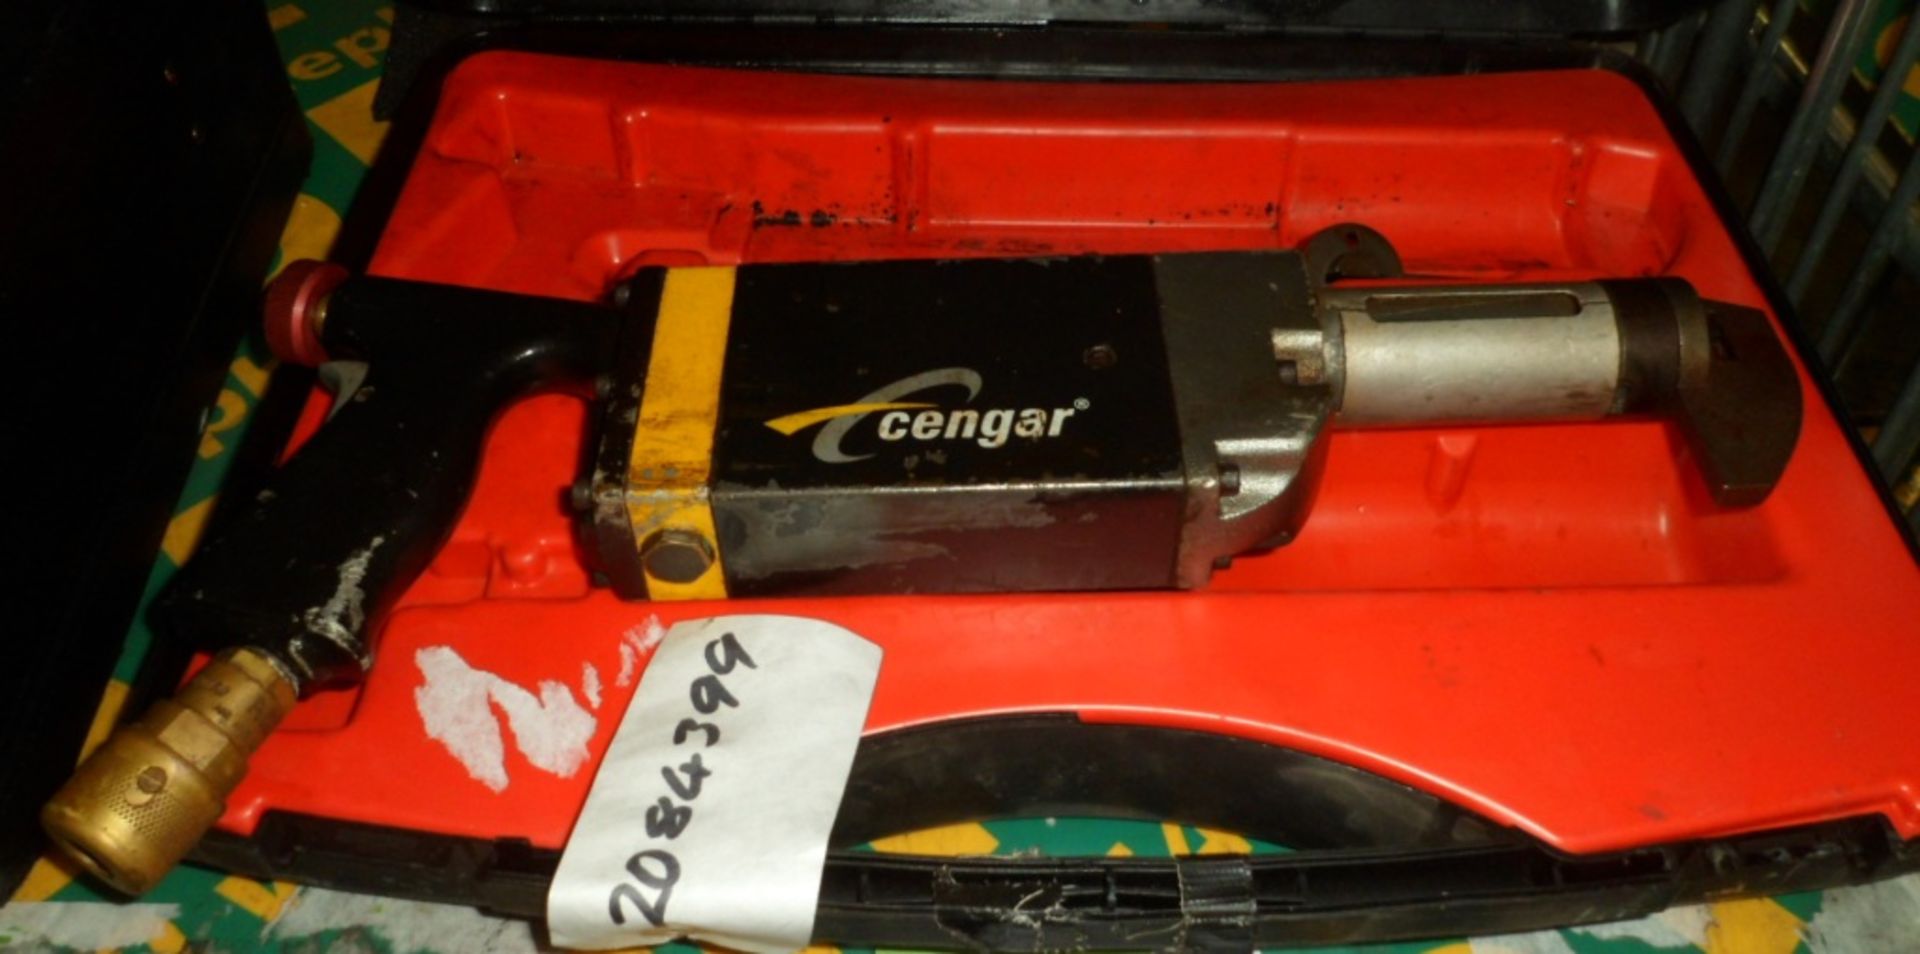 Cengar CL 50/75 - in case